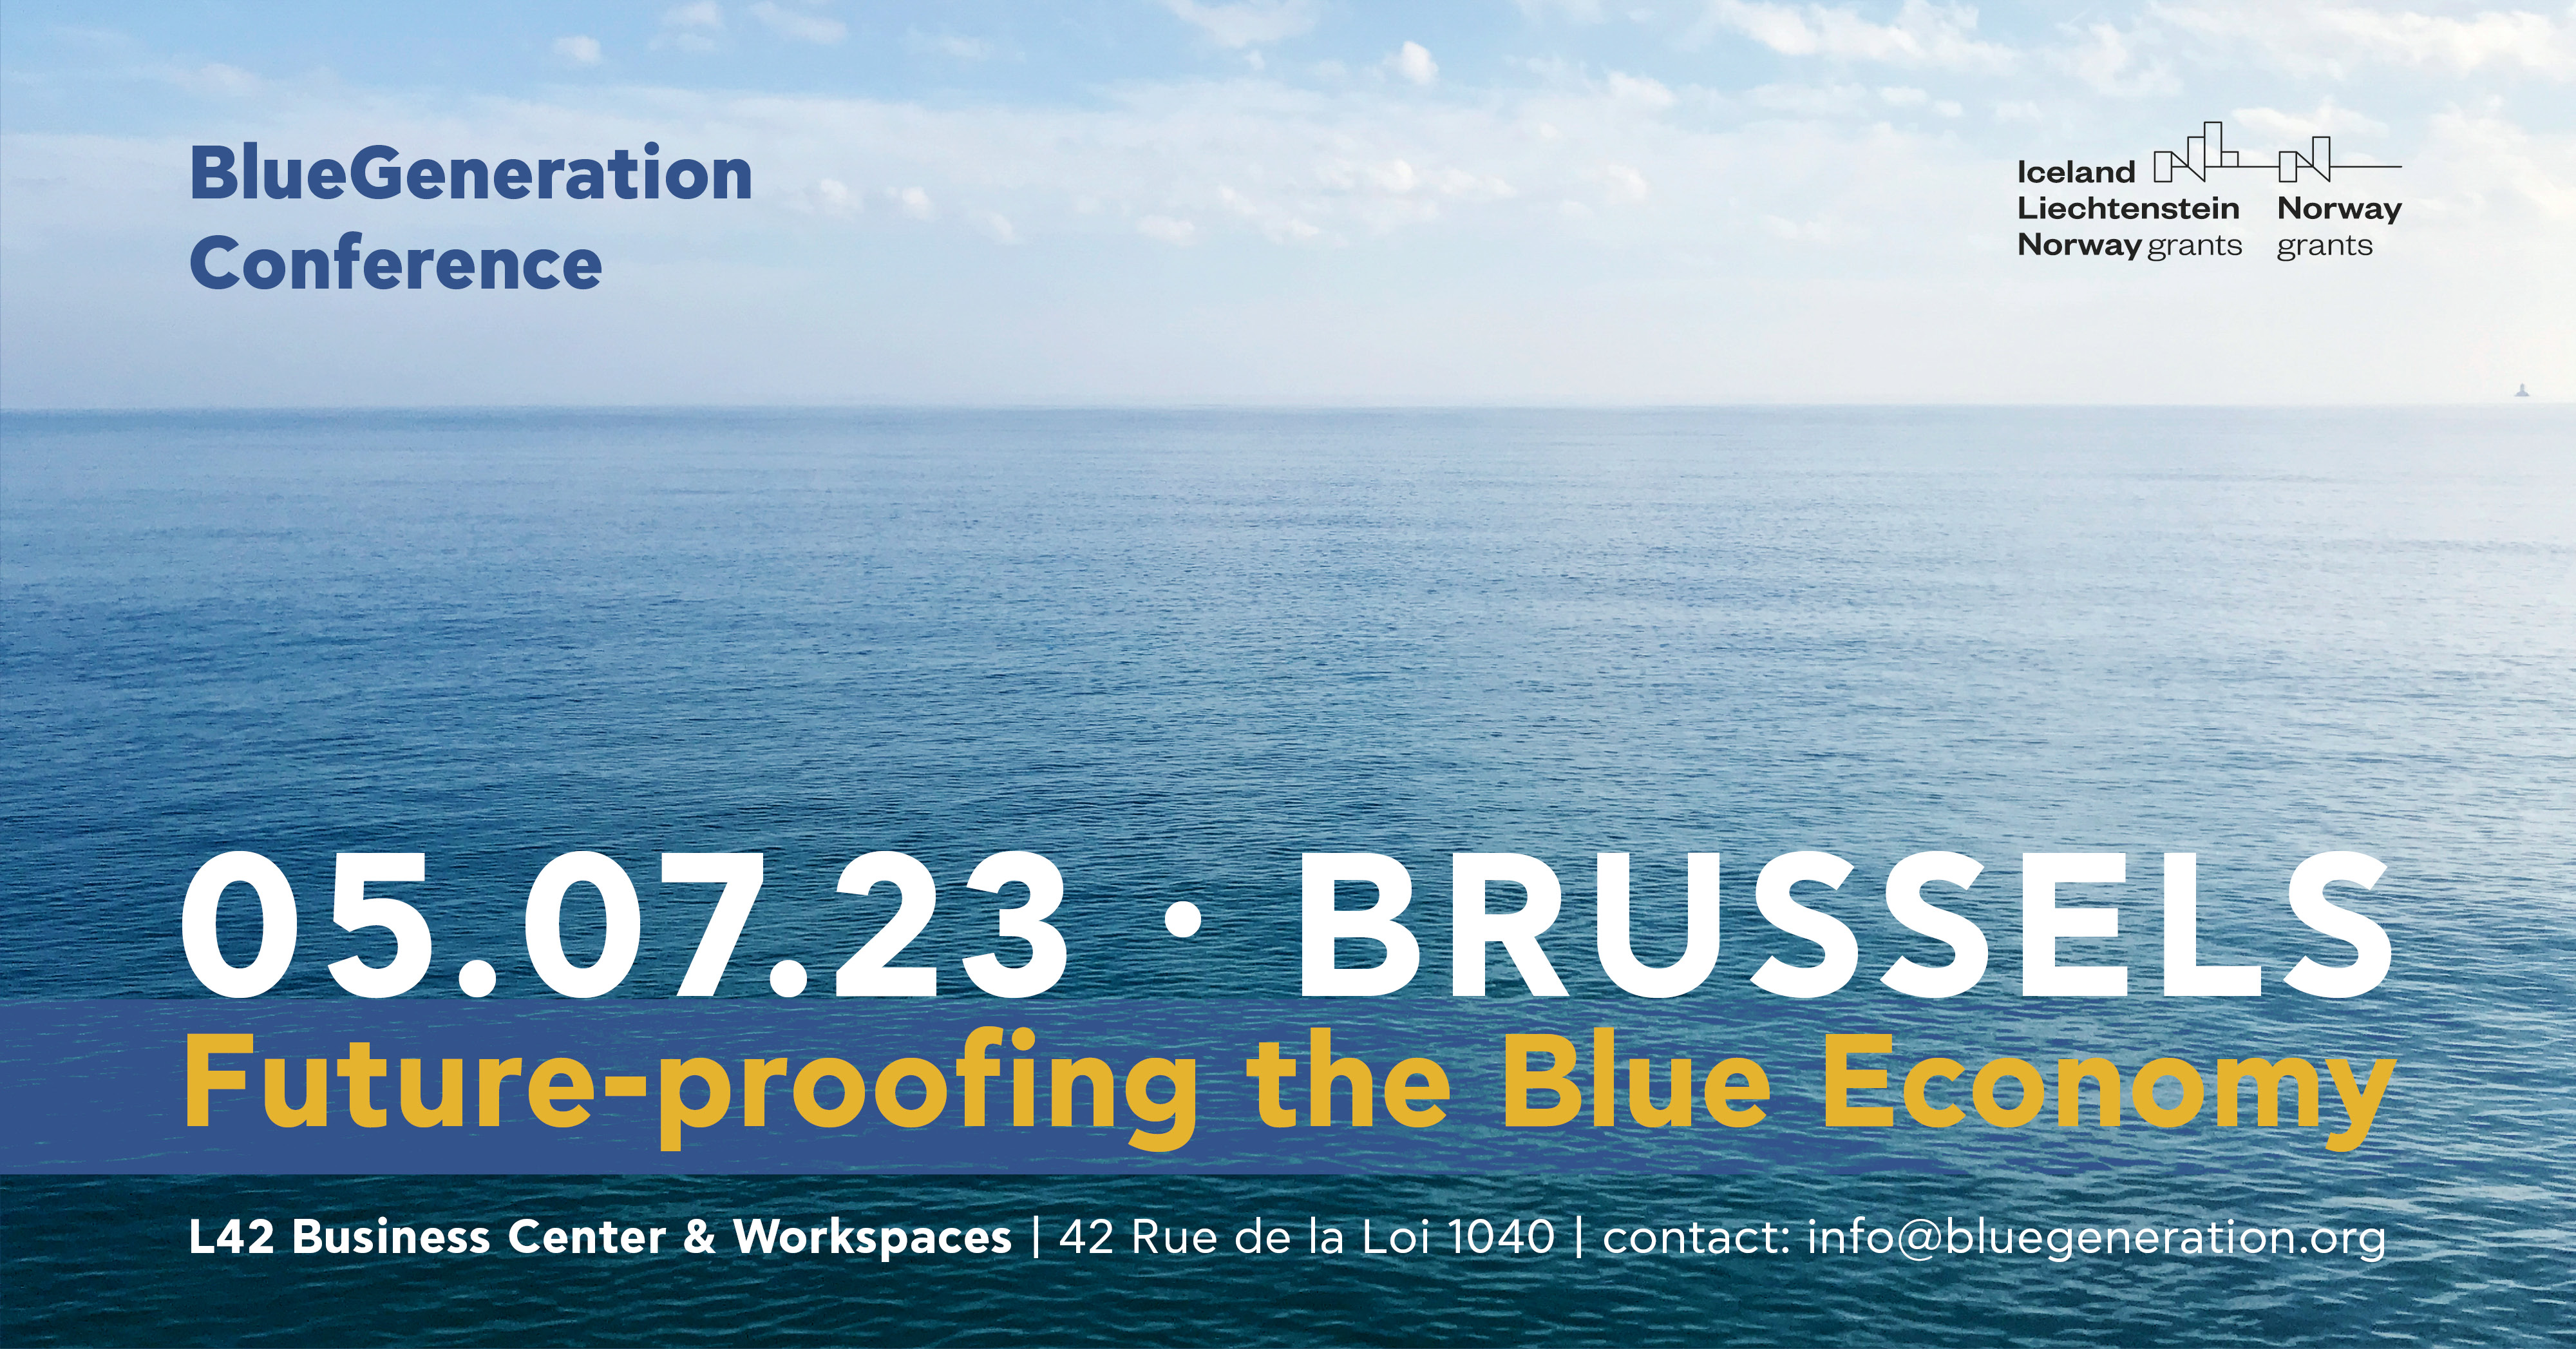 2nd BlueGeneration International Conference “Future-proofing the blue economy”